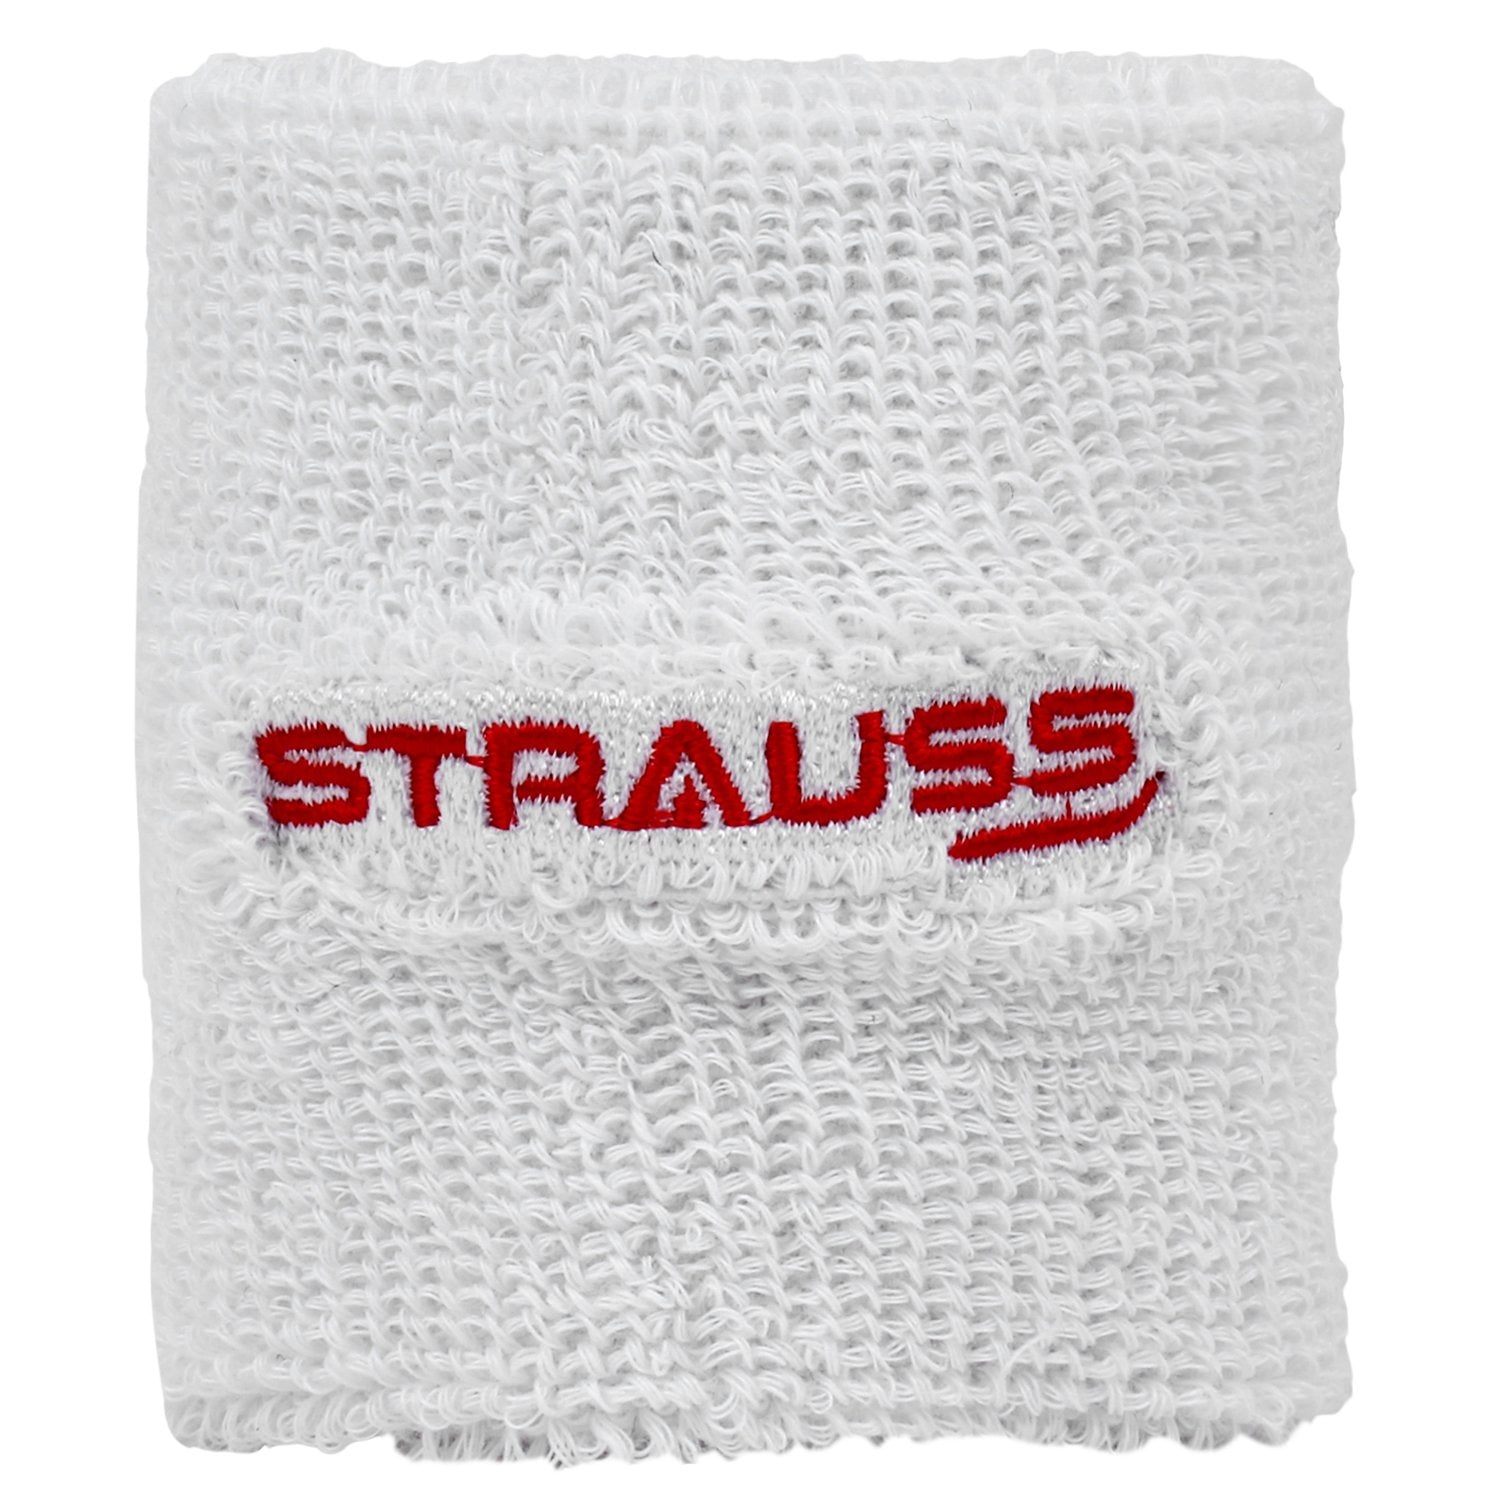 Strauss Wrist Band, Pack of 2 (White)